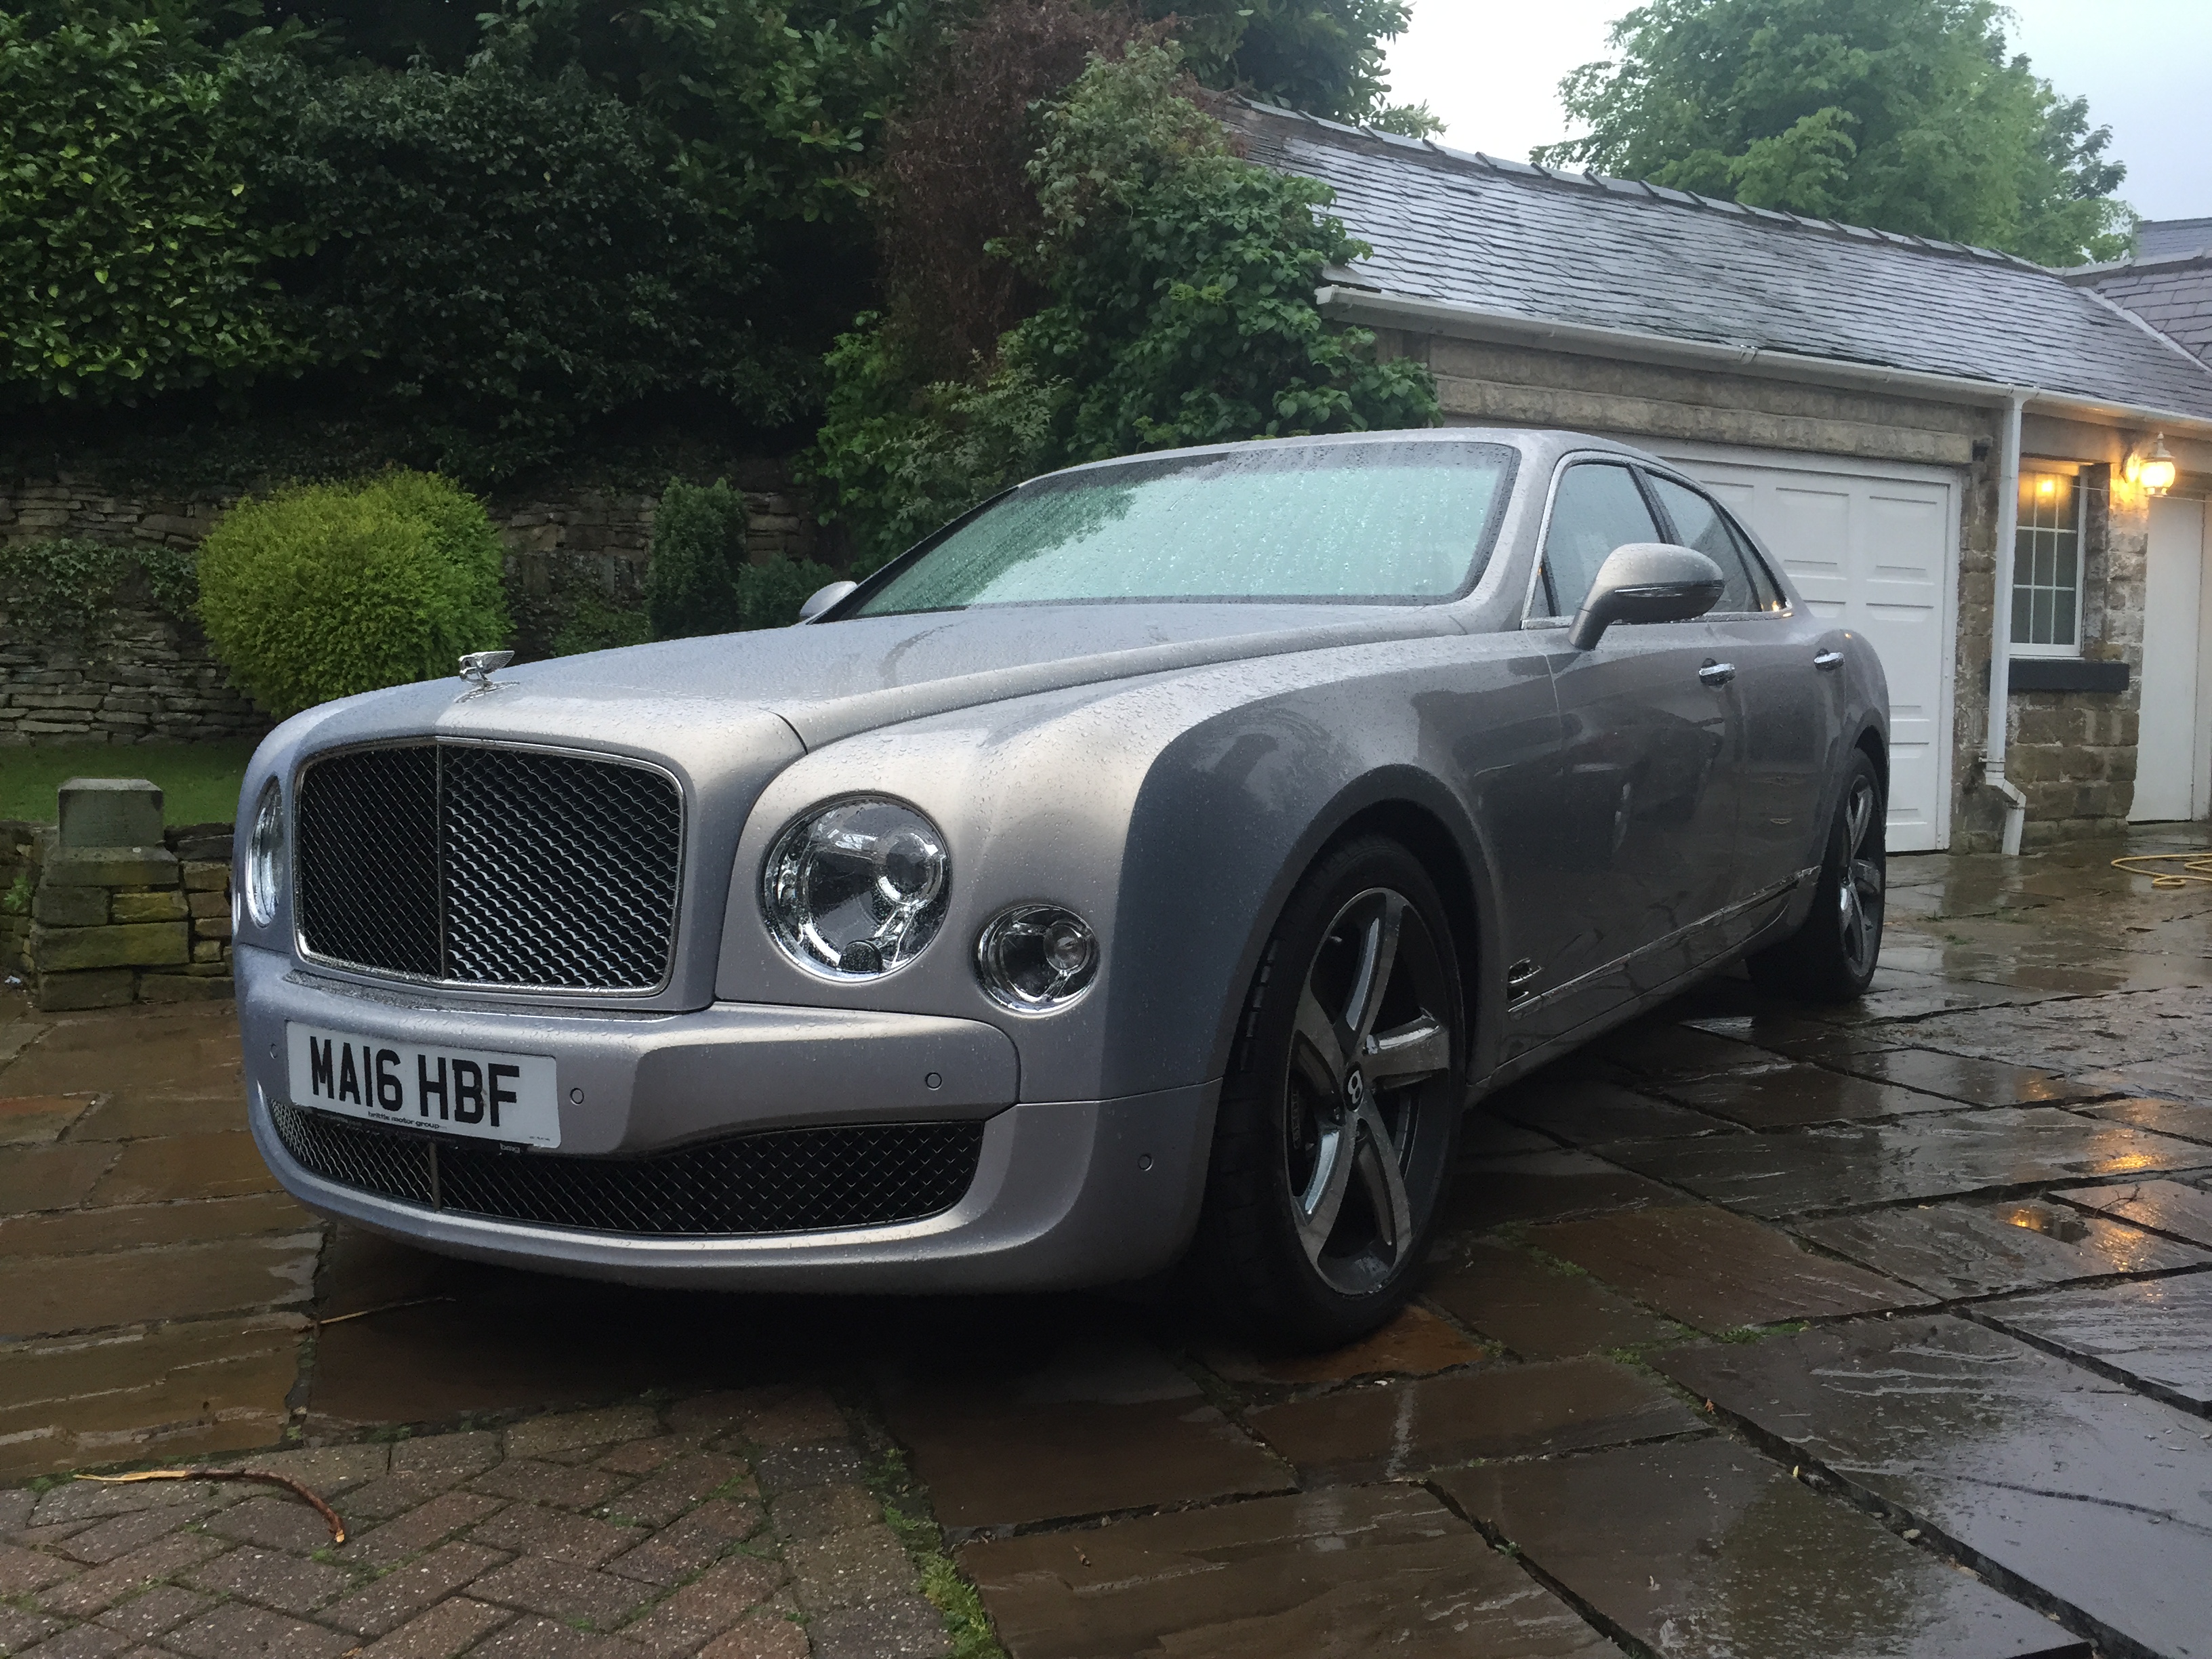 Regular Mulsanne or Speed - Honest advice please? - Page 5 - Rolls Royce & Bentley - PistonHeads